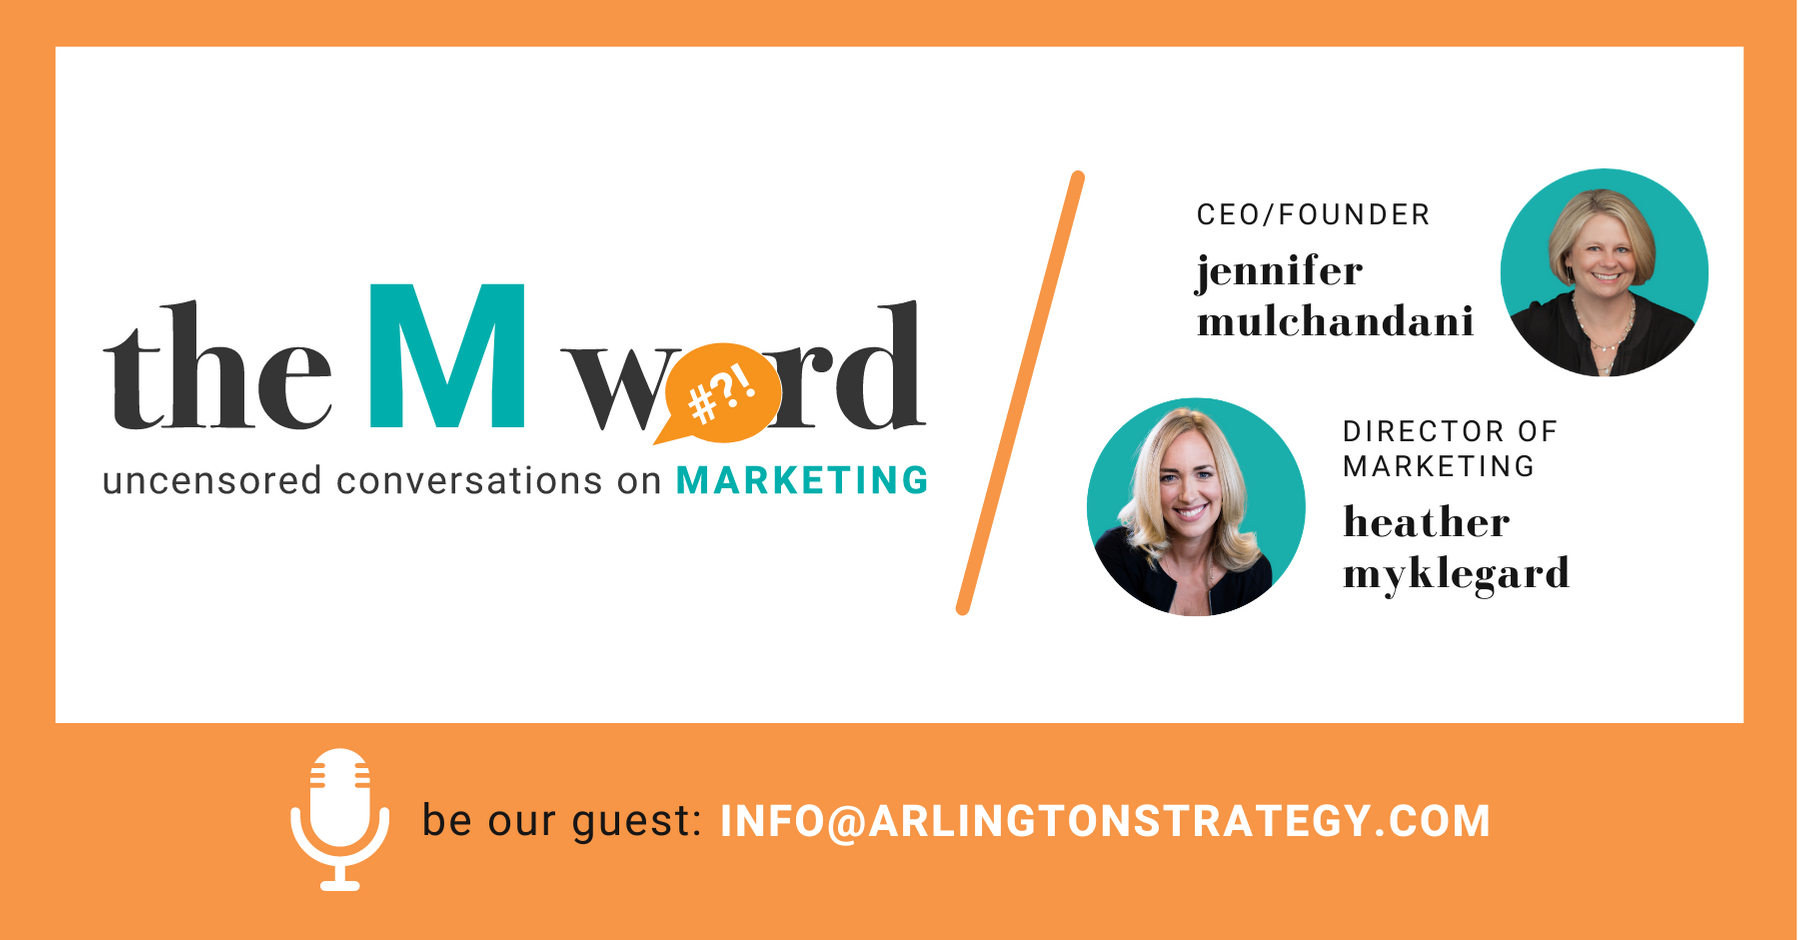 The M Word marketing podcast with Jennifer Mulchandani and Heather Myklegard of Arlington Strategy